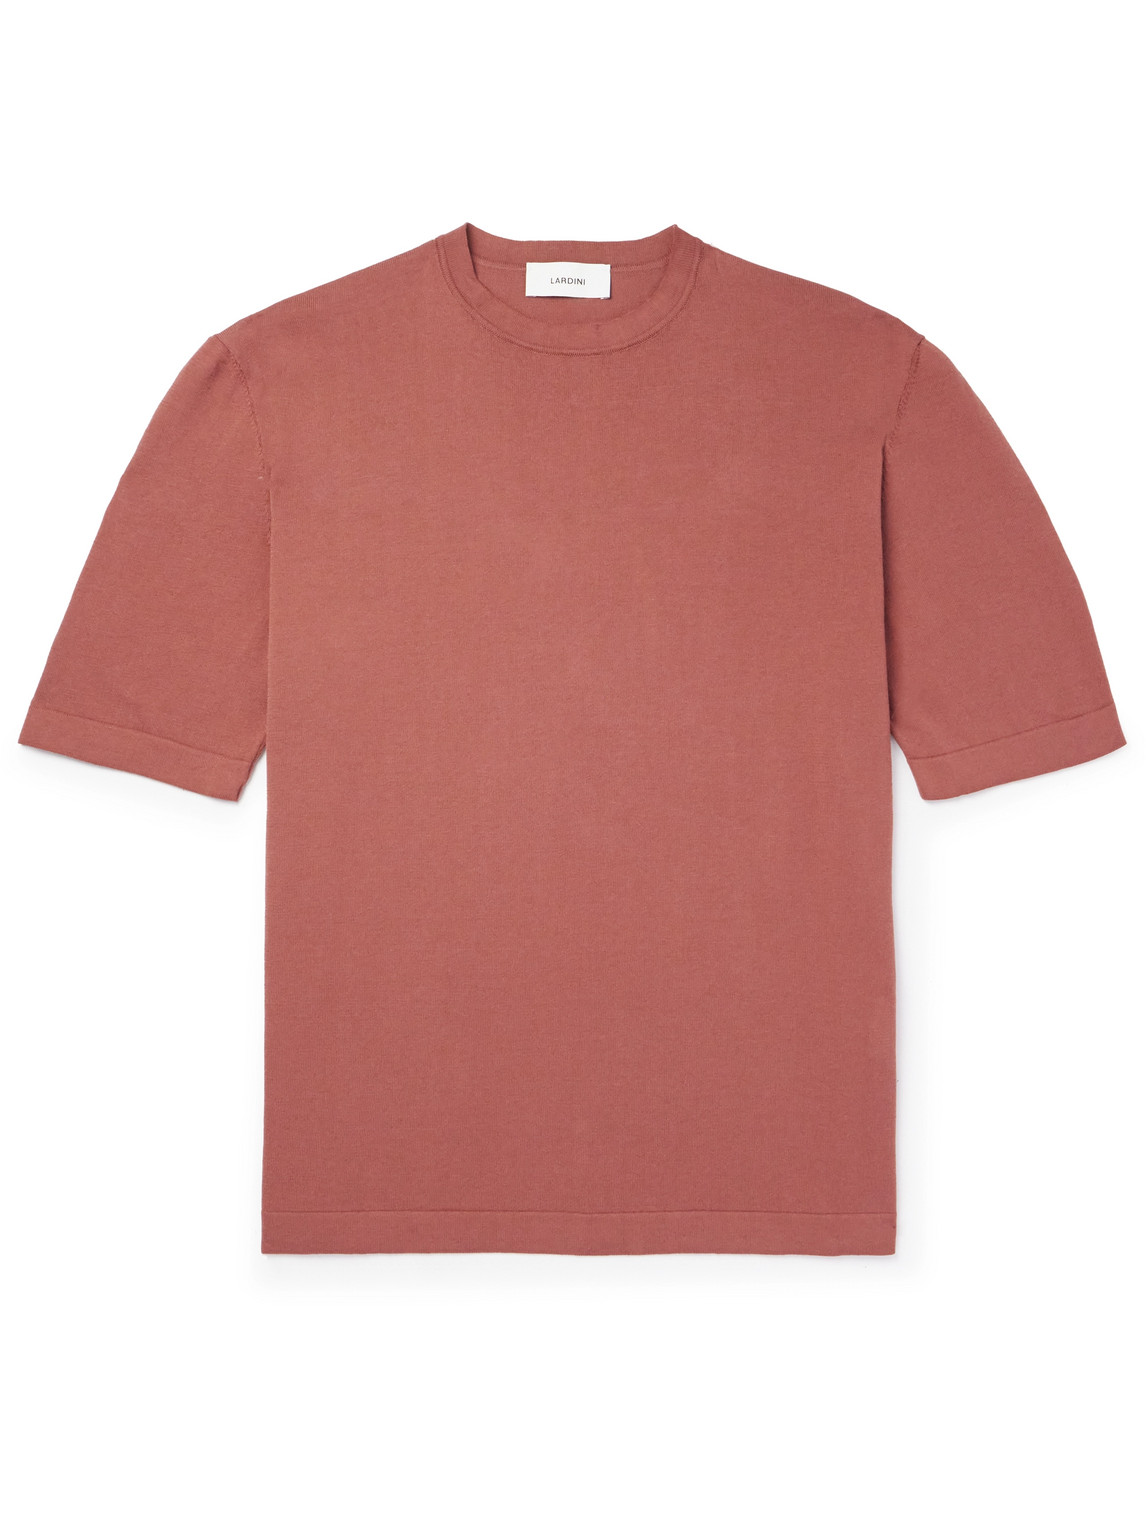 Lardini - Cotton T-Shirt - Men - Pink - XL von Lardini